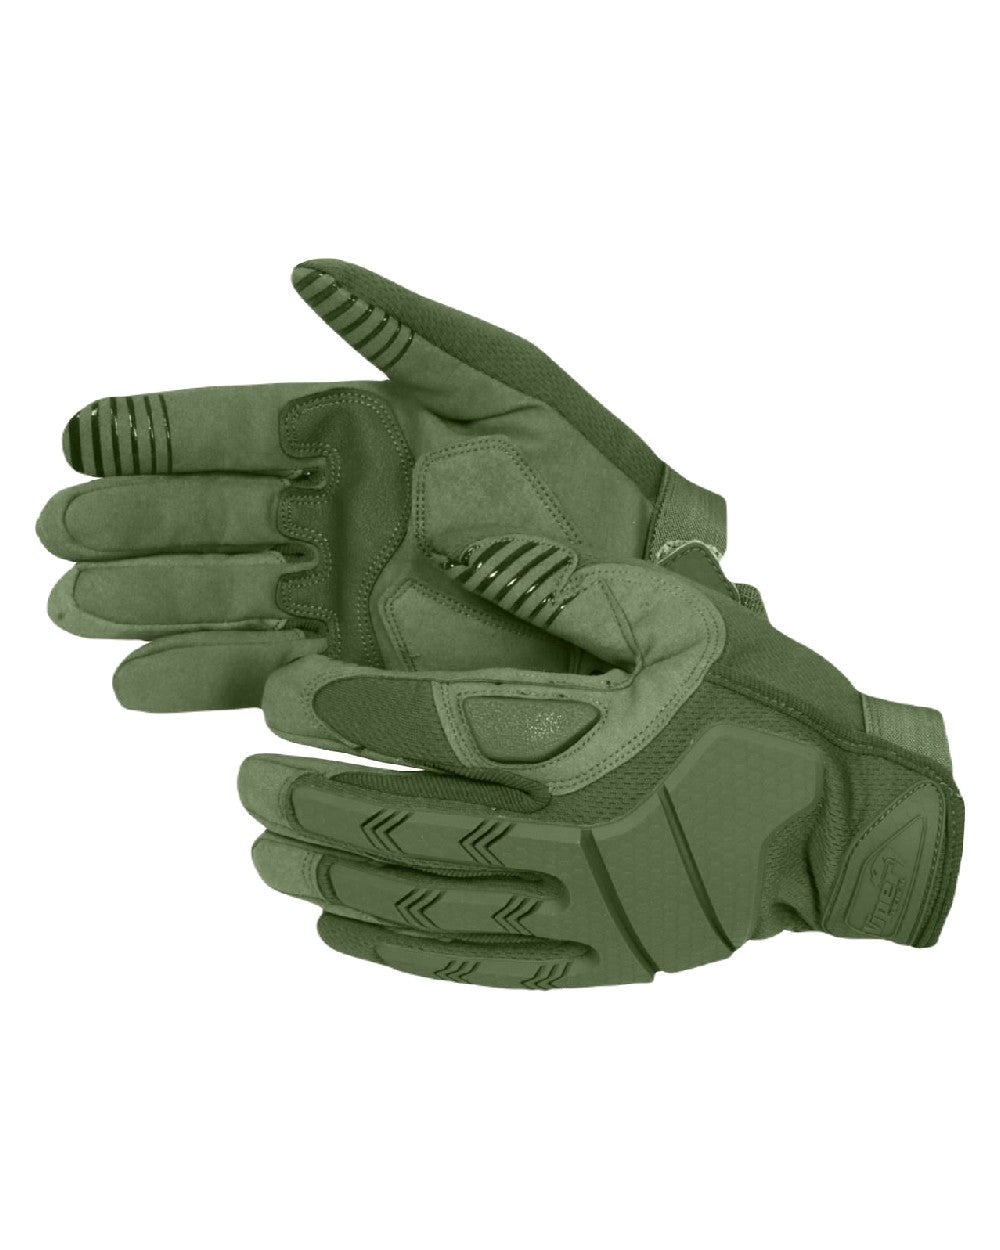 Viper Recon Gloves In Green 